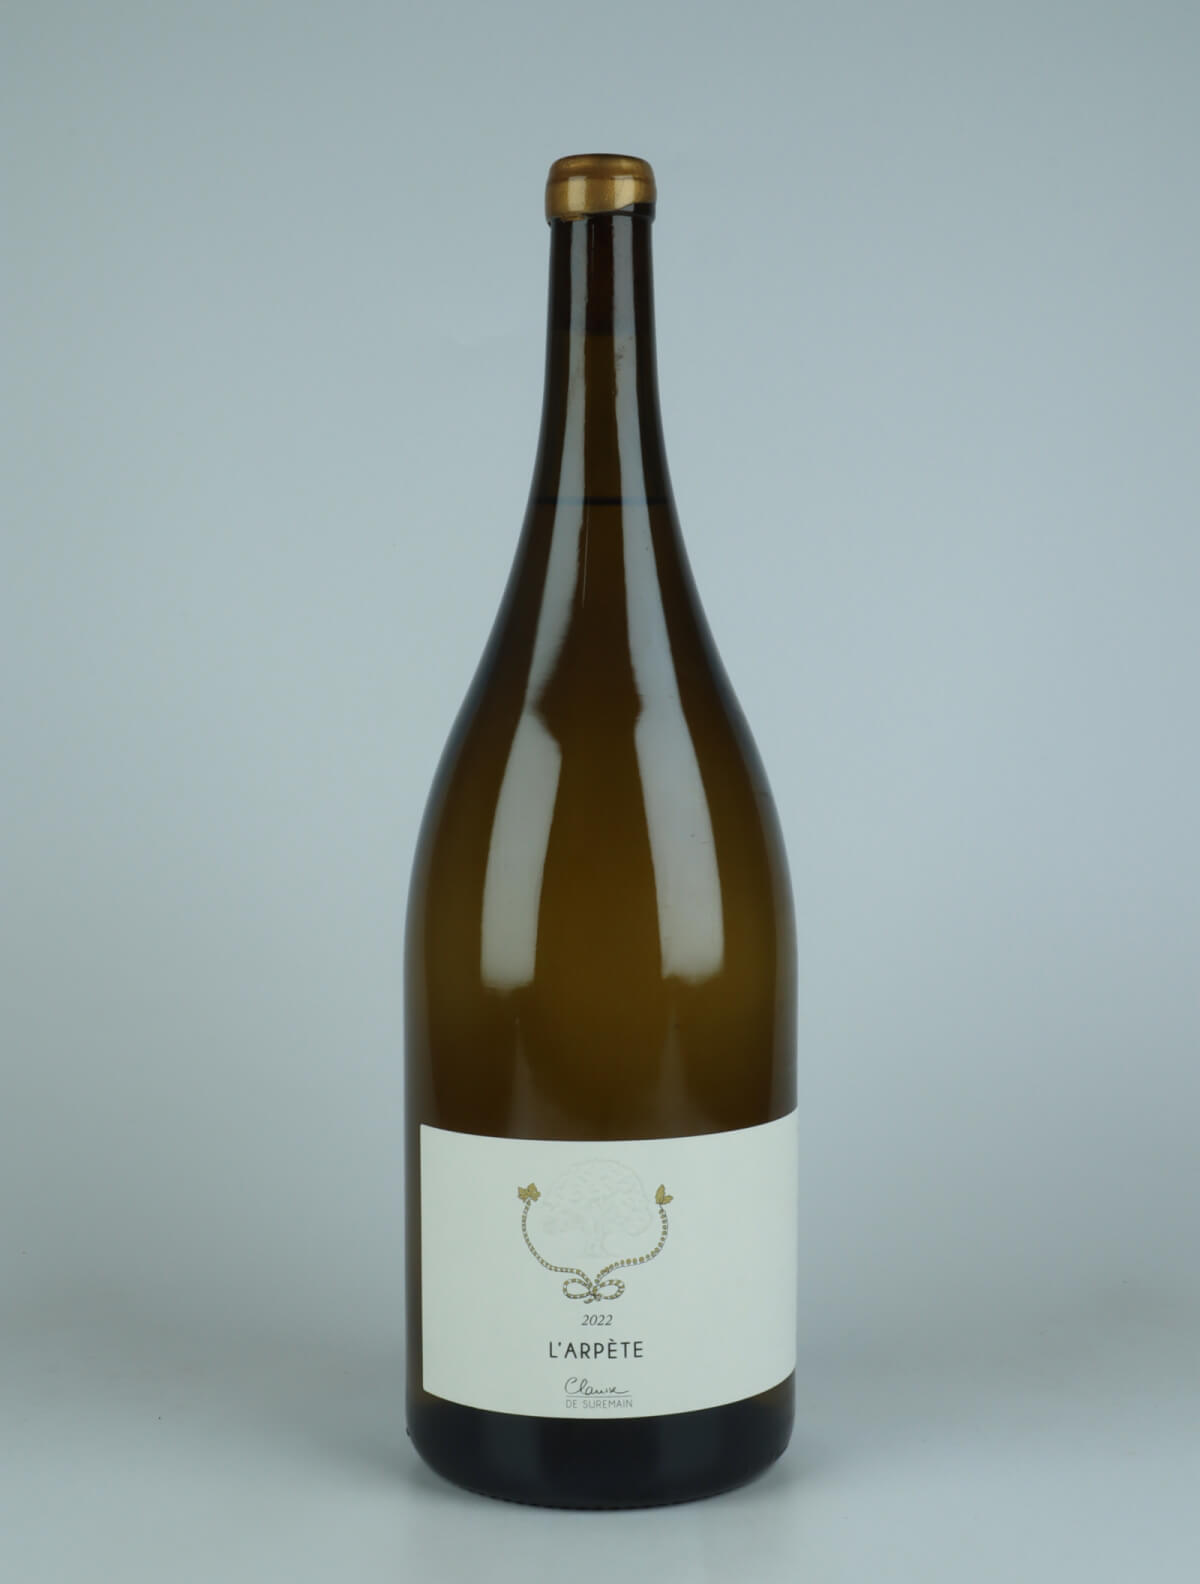 A bottle 2022 L'Arpète - Magnum White wine from Clarisse de Suremain, Burgundy in France